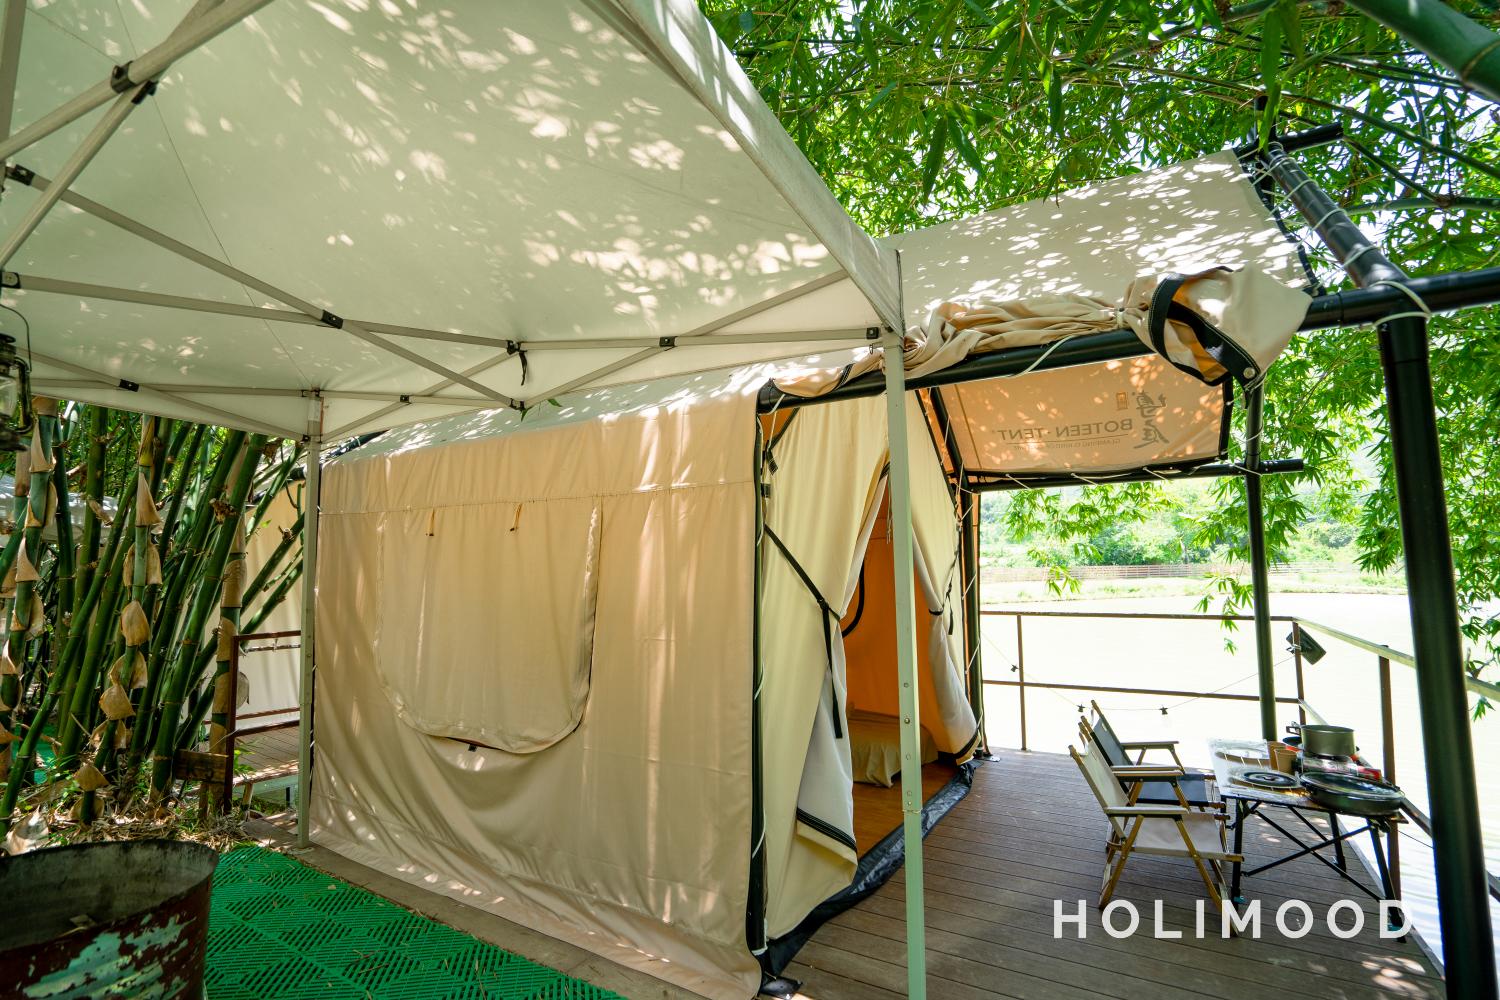 We Camp - Pool Side Camping & Glamping & BYOS & Car Camping 【全港獨家湖塘景】豪華冷氣小屋帳篷Zone K - 日營  /2日1夜體驗 (2-4人) 5